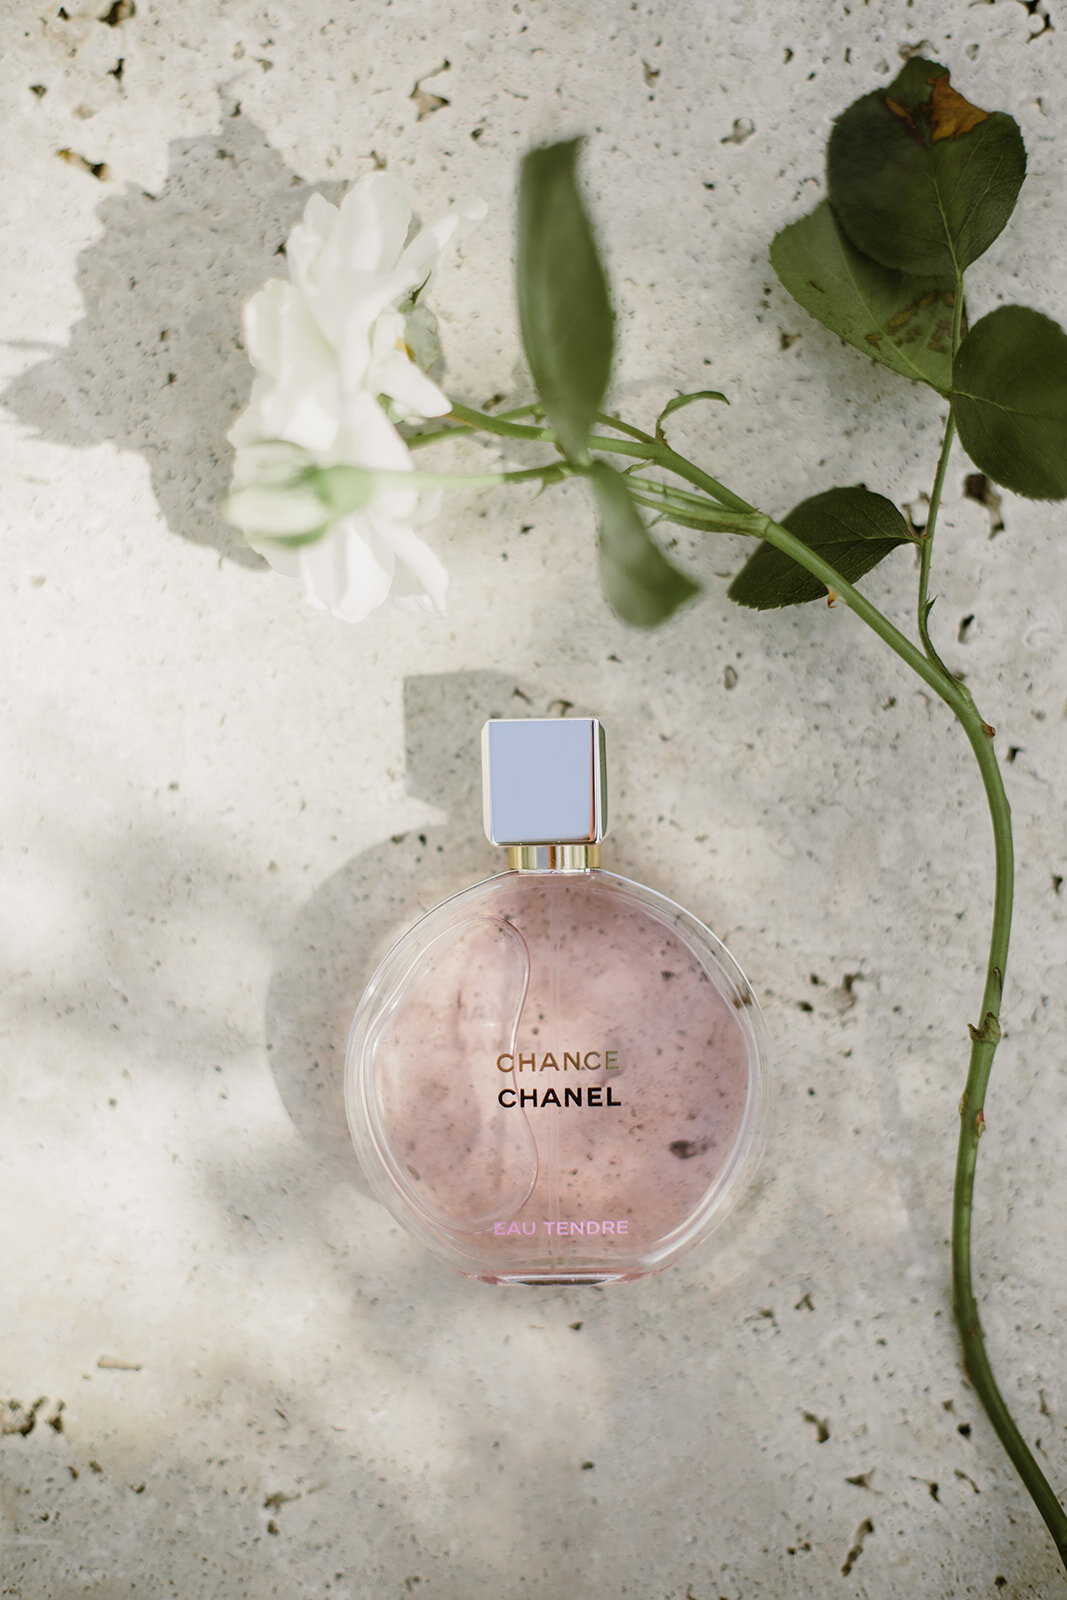  Chanel perfume. Intimate Italian villa elopement at Monteventoso in Madison, Virginia. 